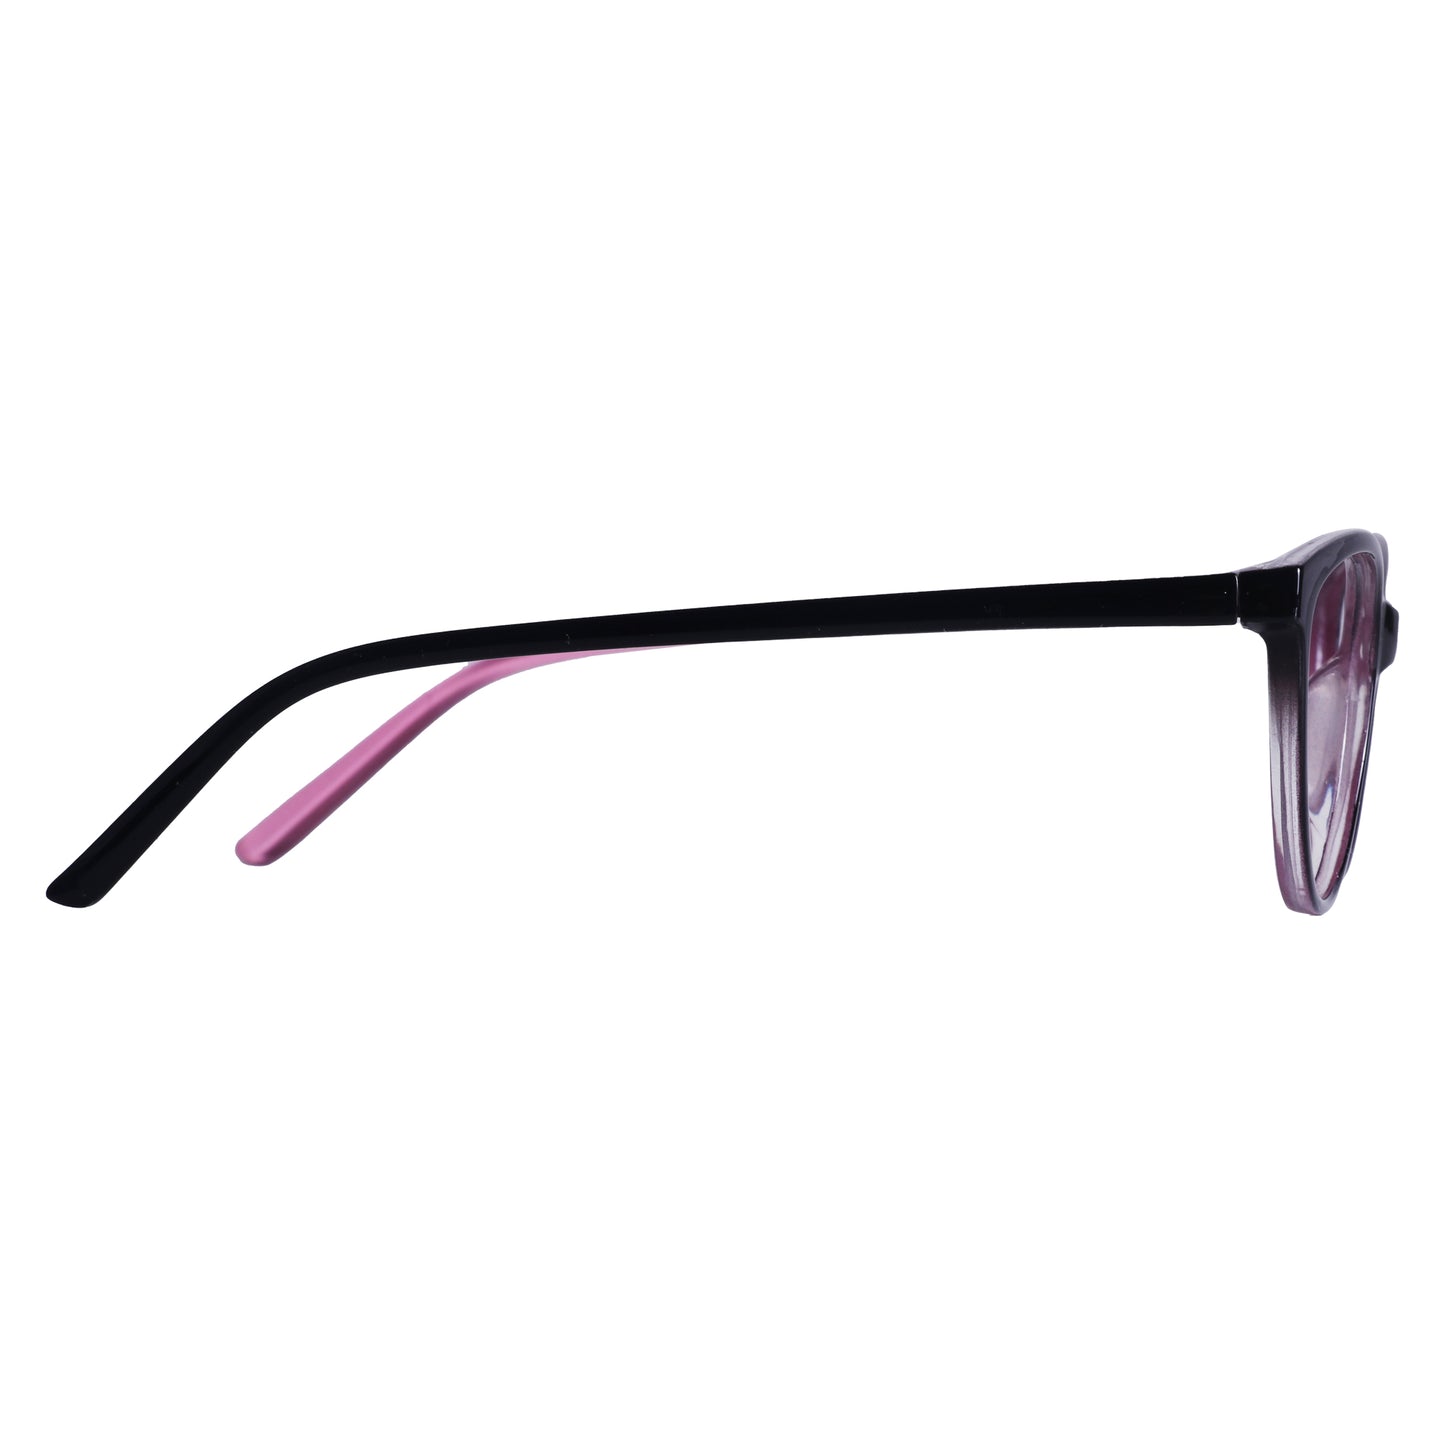 Loscomun Computer Glasses Black Purple Cateye Eyeglasses